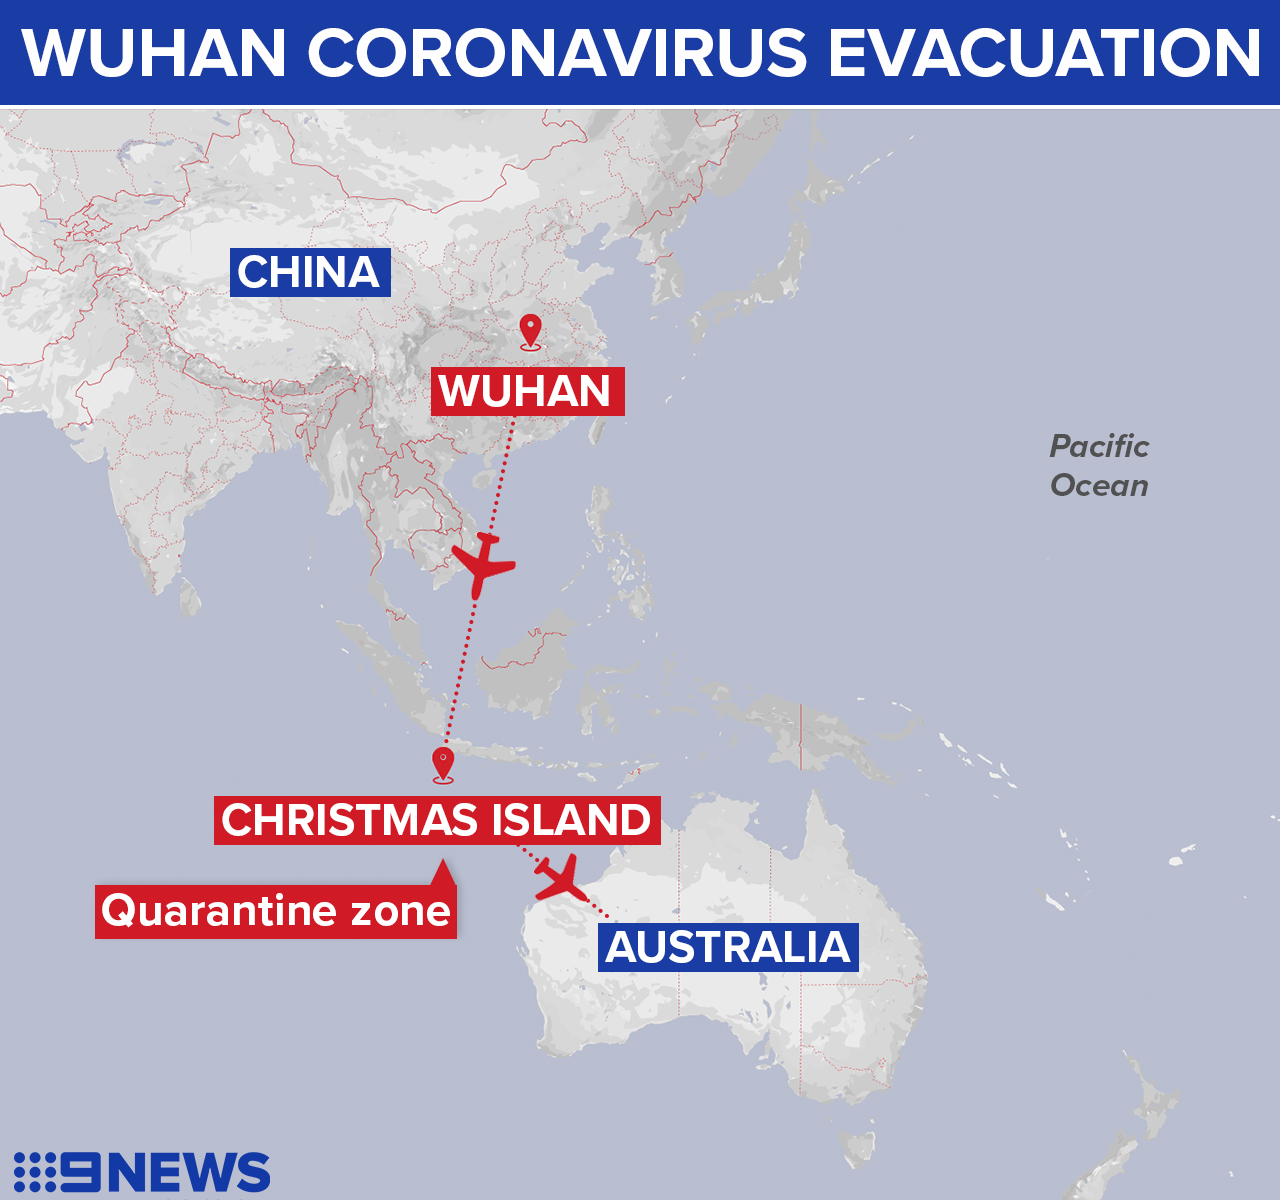 Australians in Wuhan will be taken to Christmas Island for quarantine.